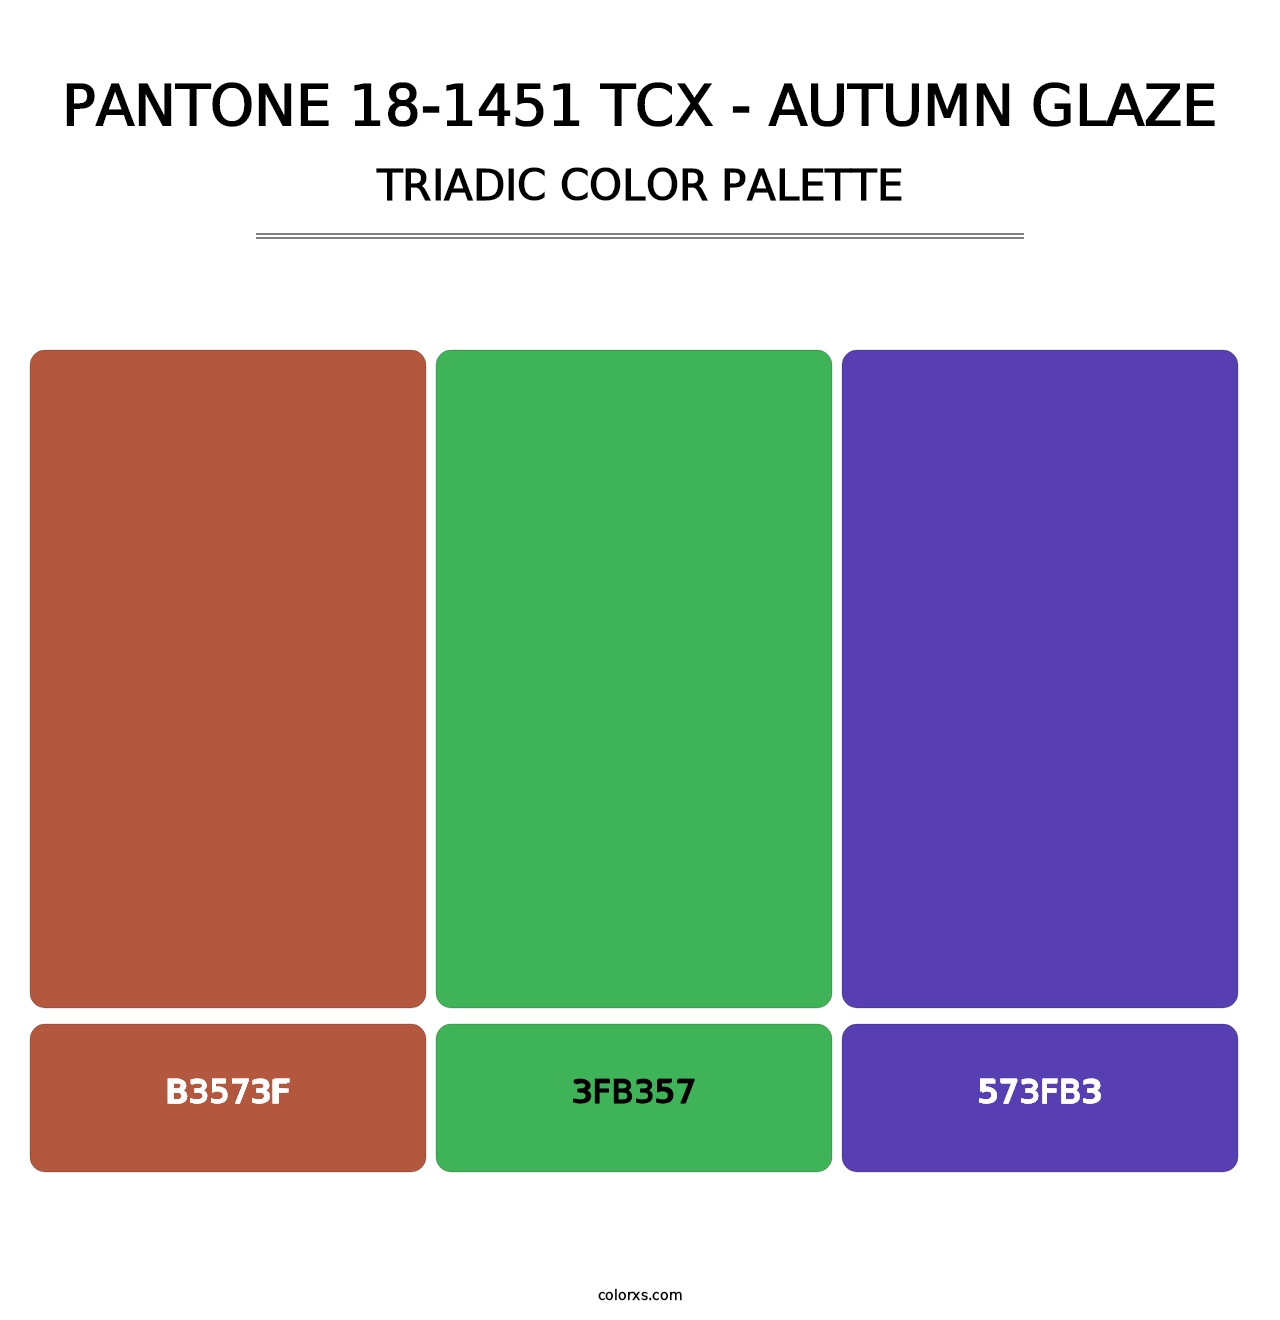 PANTONE 18-1451 TCX - Autumn Glaze - Triadic Color Palette